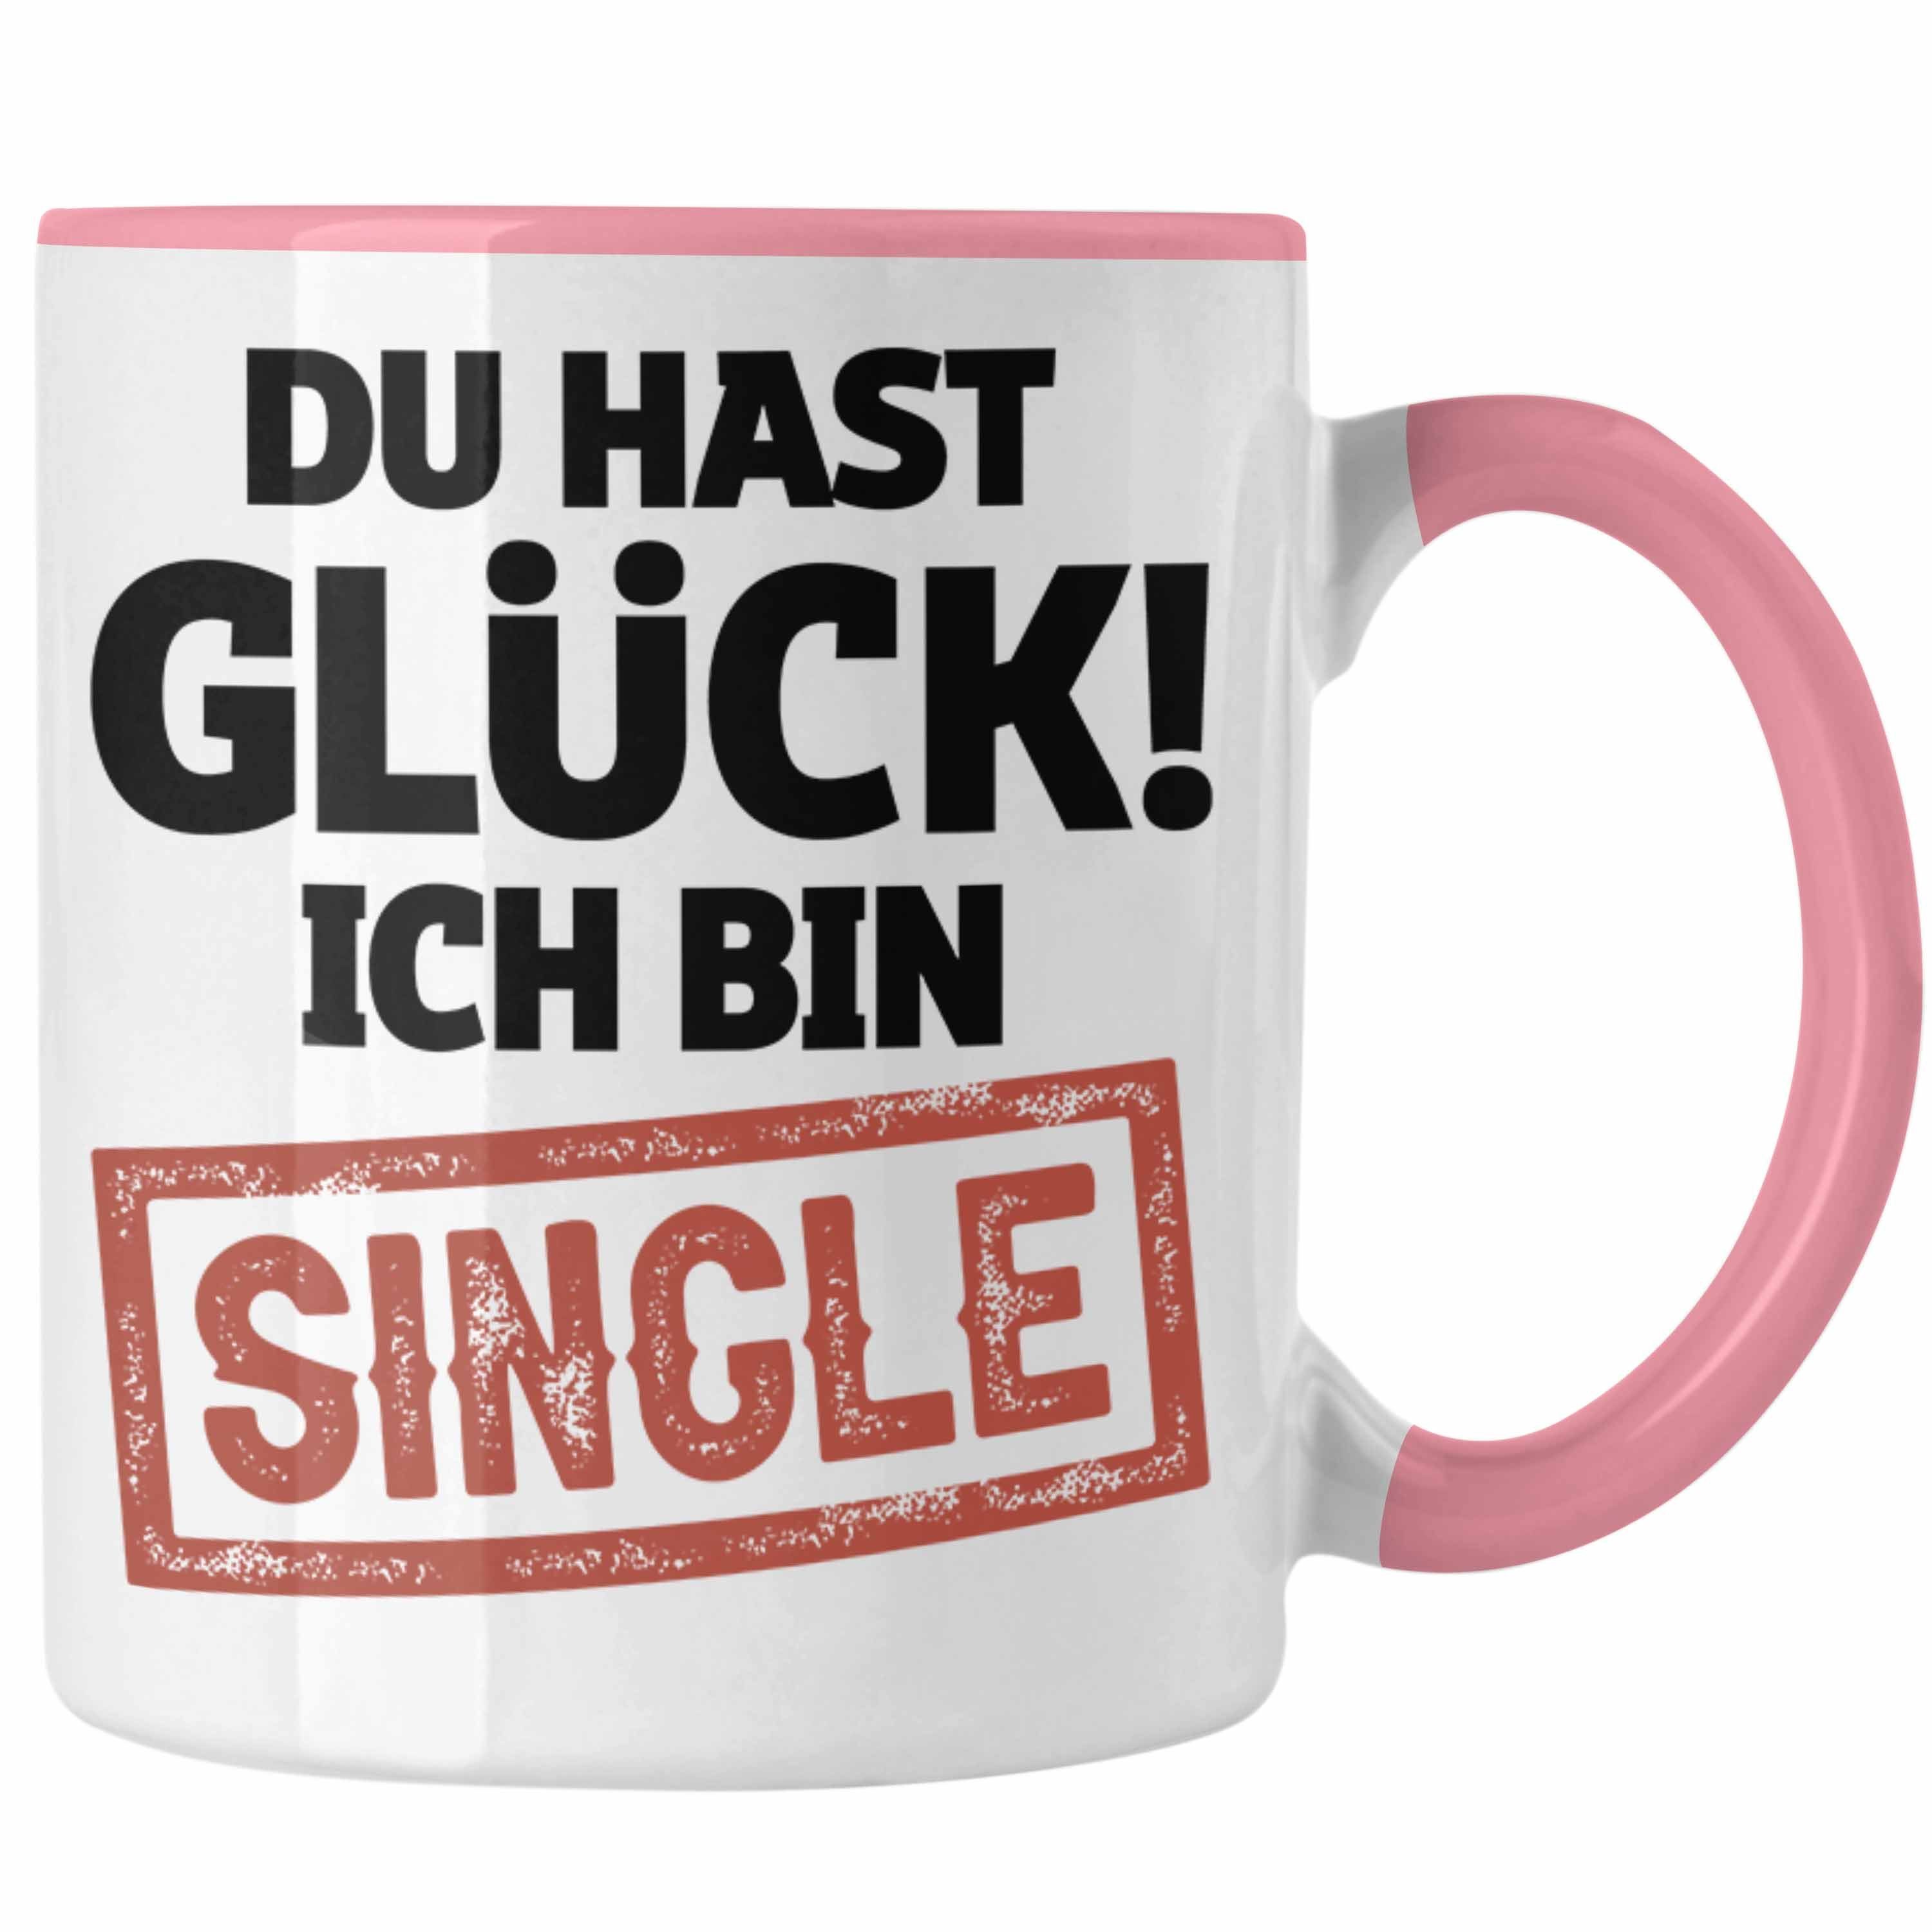 Trendation Tasse Single Solo Tasse Geschenk Kollege Geschenkidee Kaffee-Becher Rosa